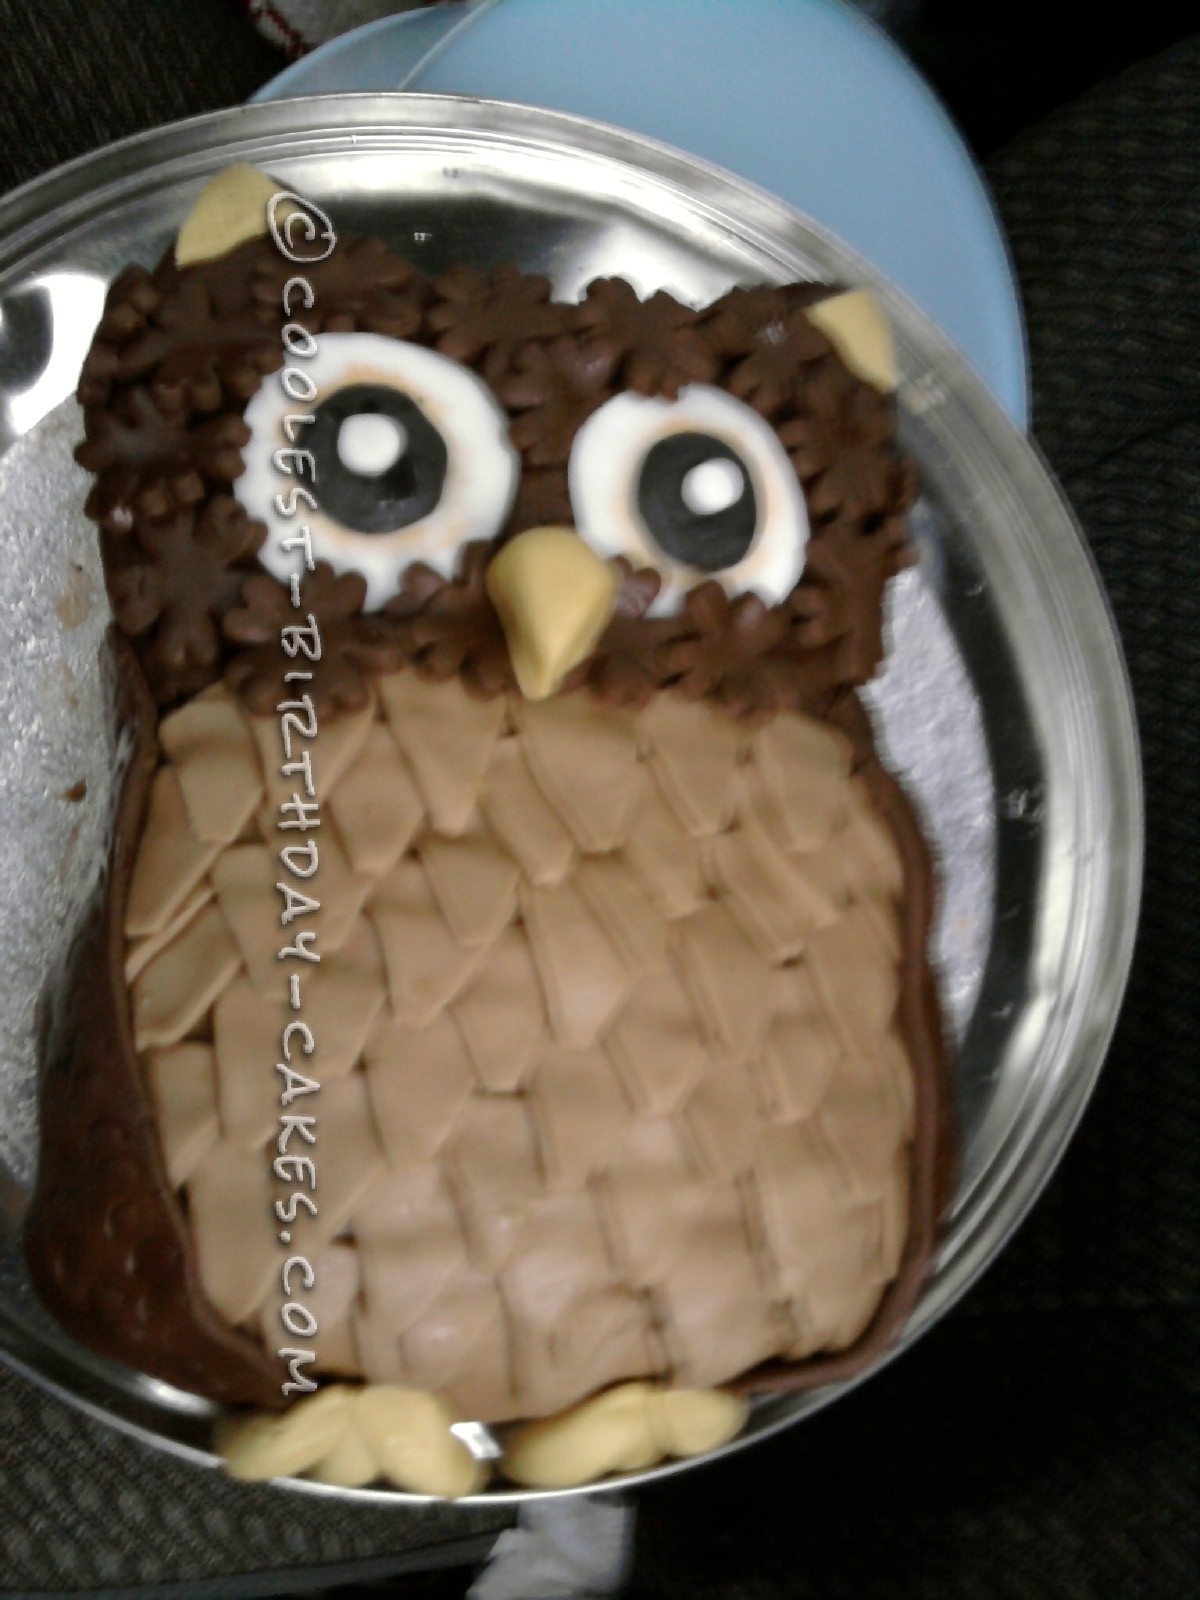 Coolest Owl Birthday Cake